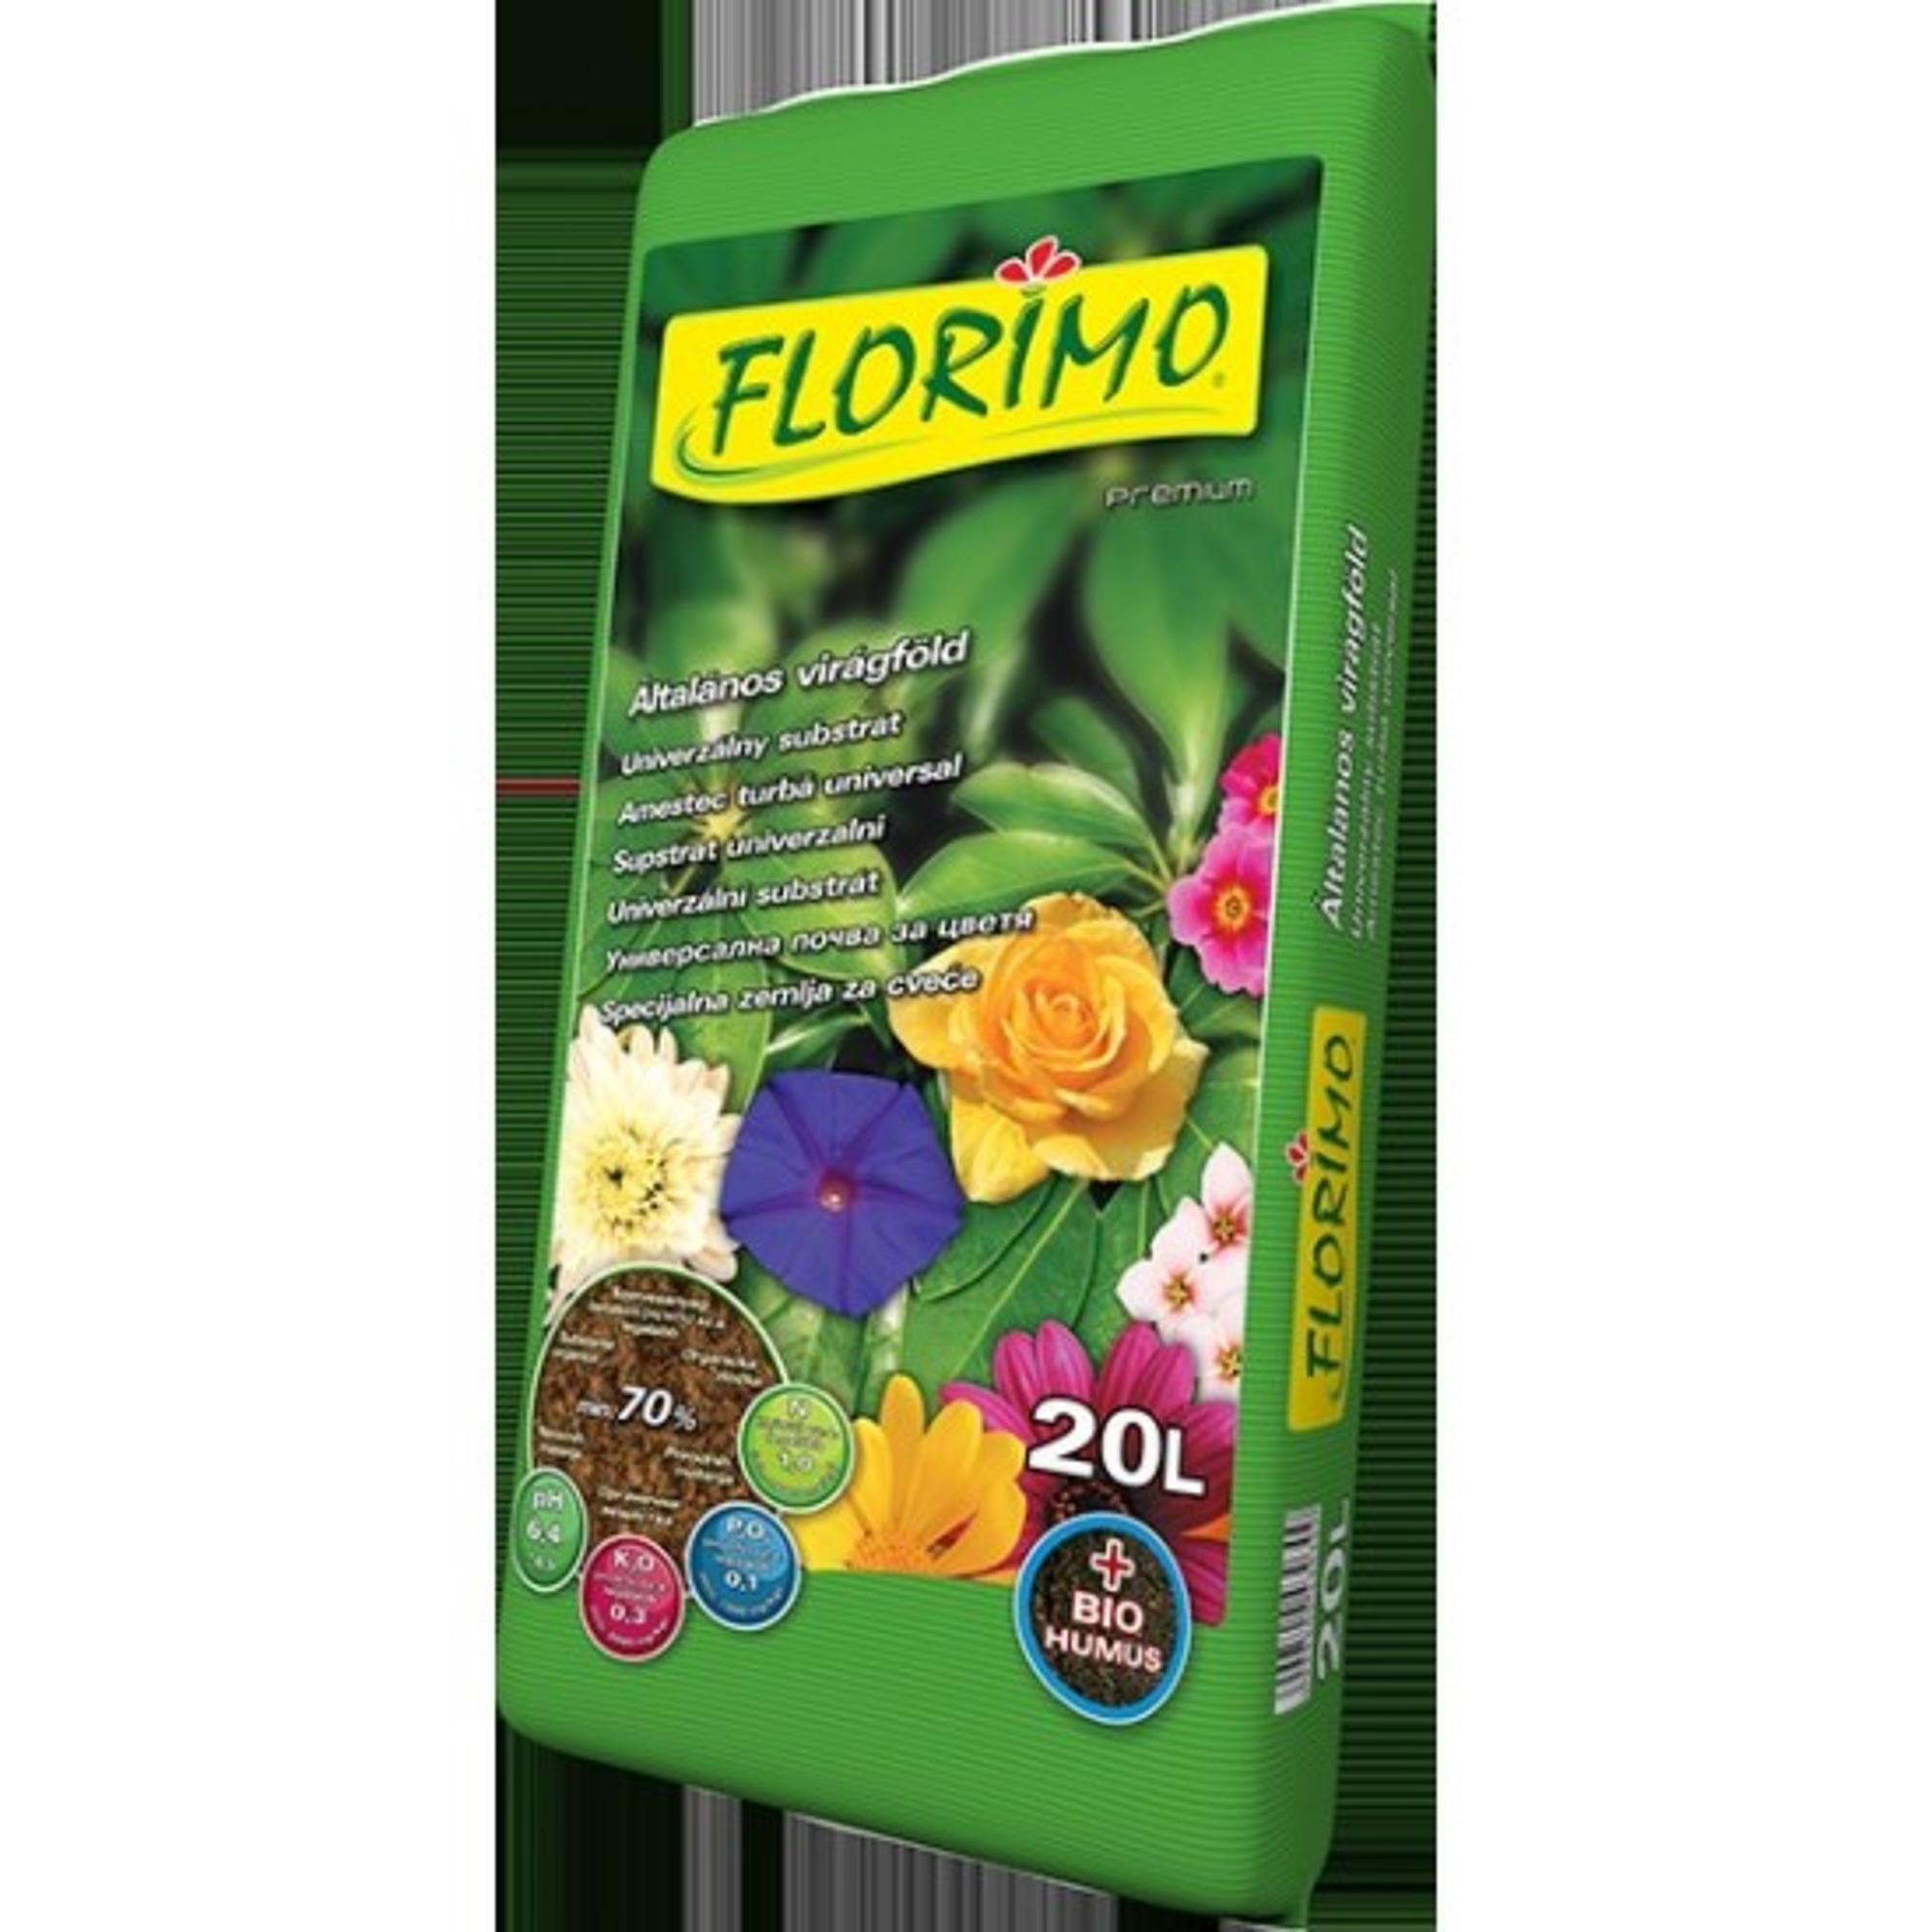 Florimo általános virágföld 10 l